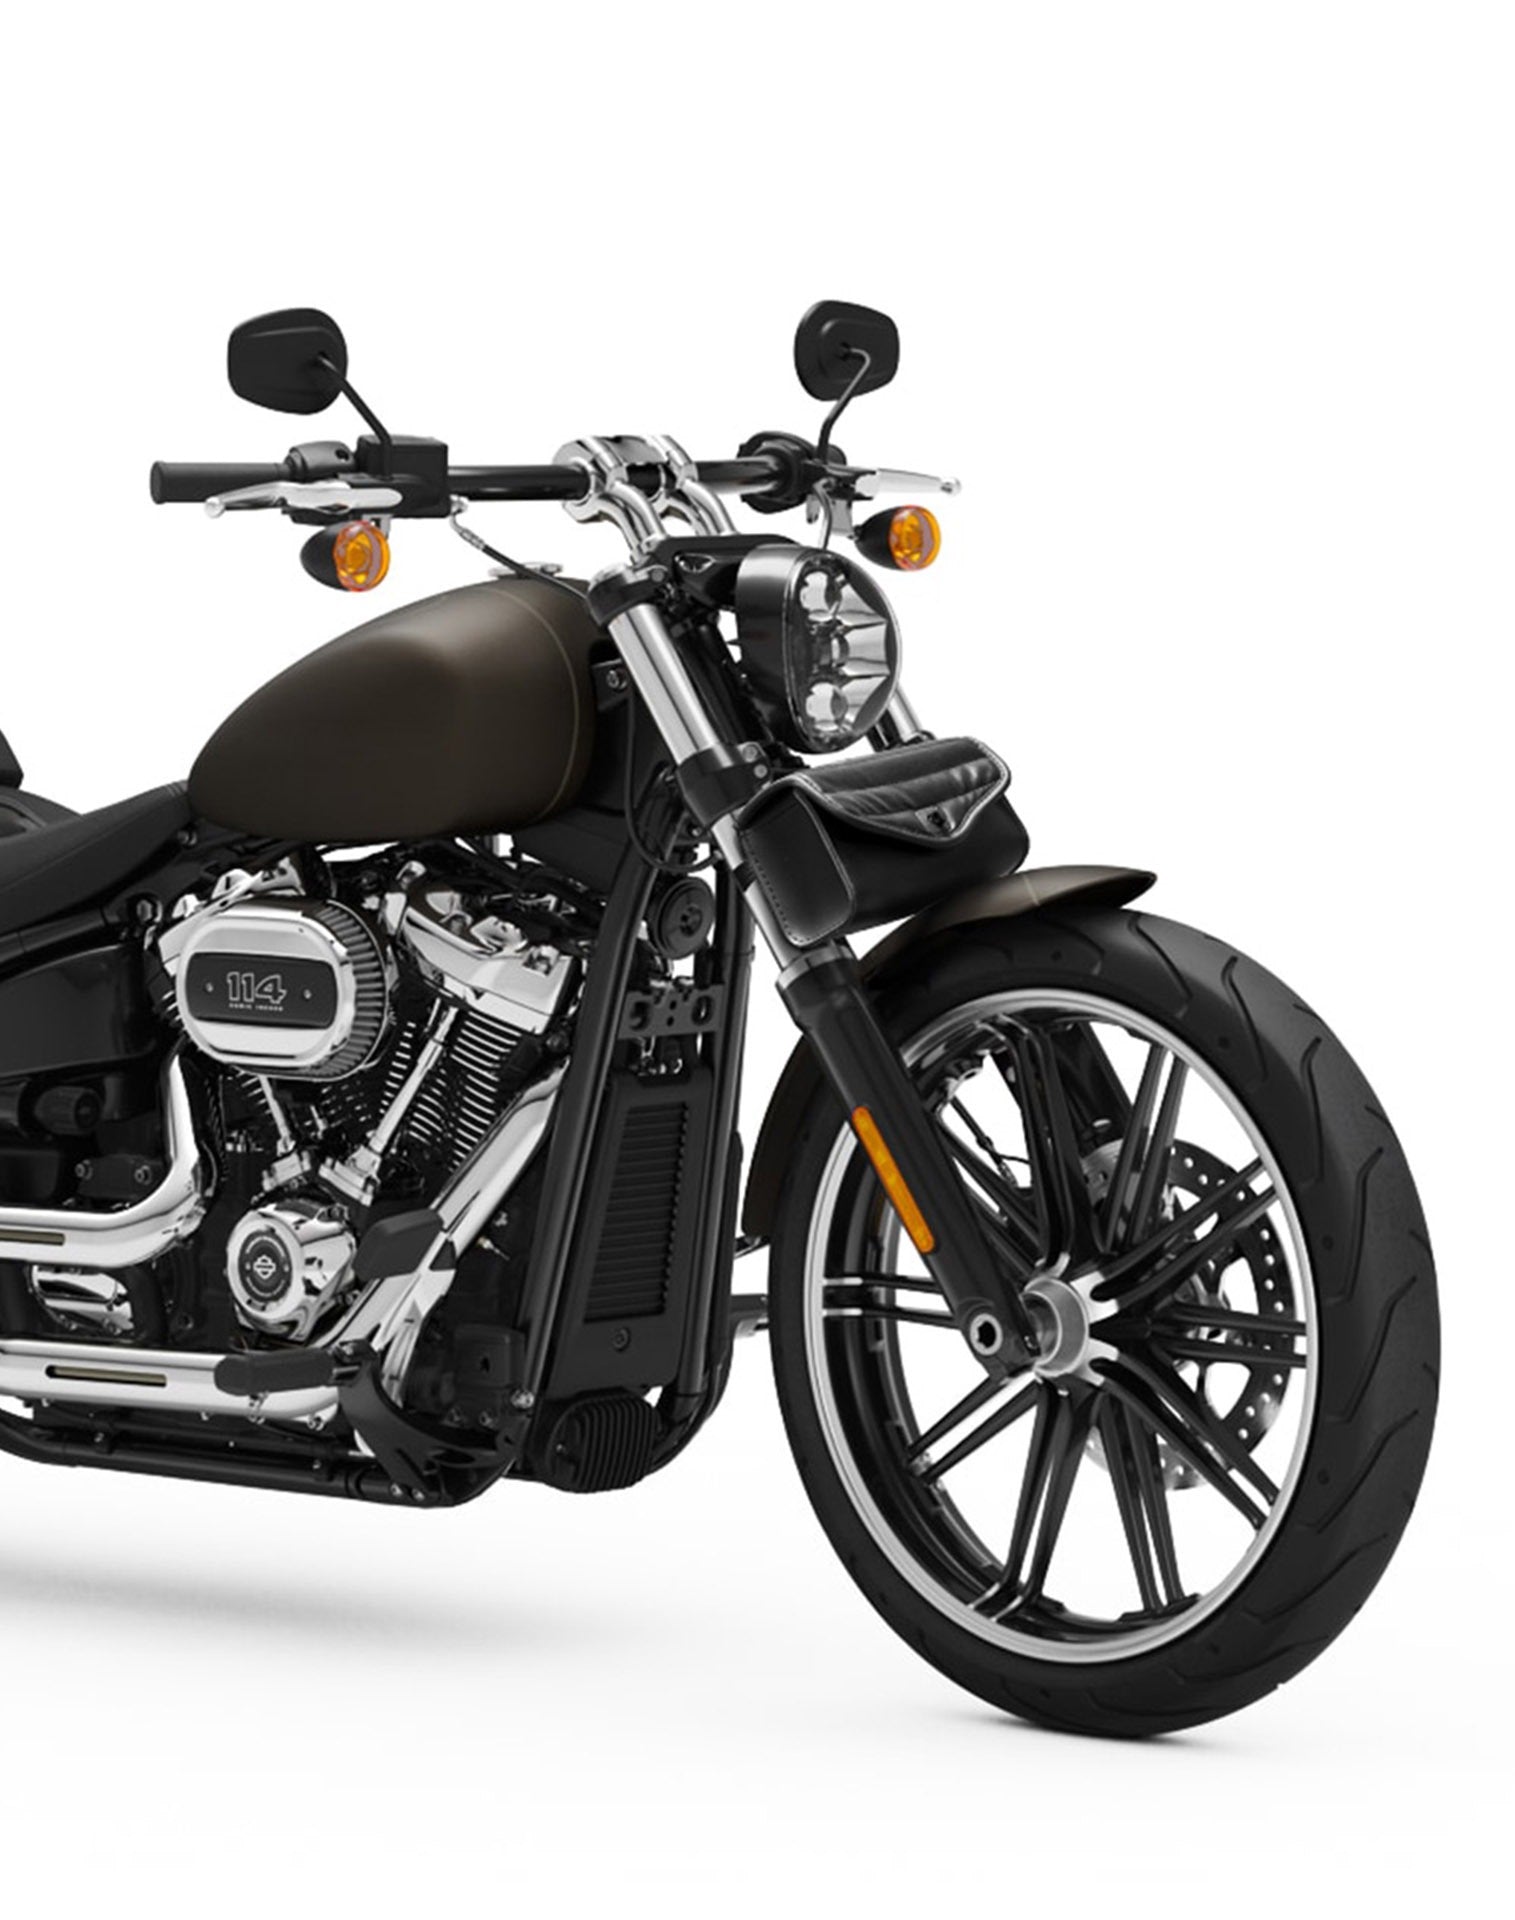 Viking Iron Born Horizontal Stitch Leather Motorcycle Handlebar Bag for Harley Davidson Close Up View